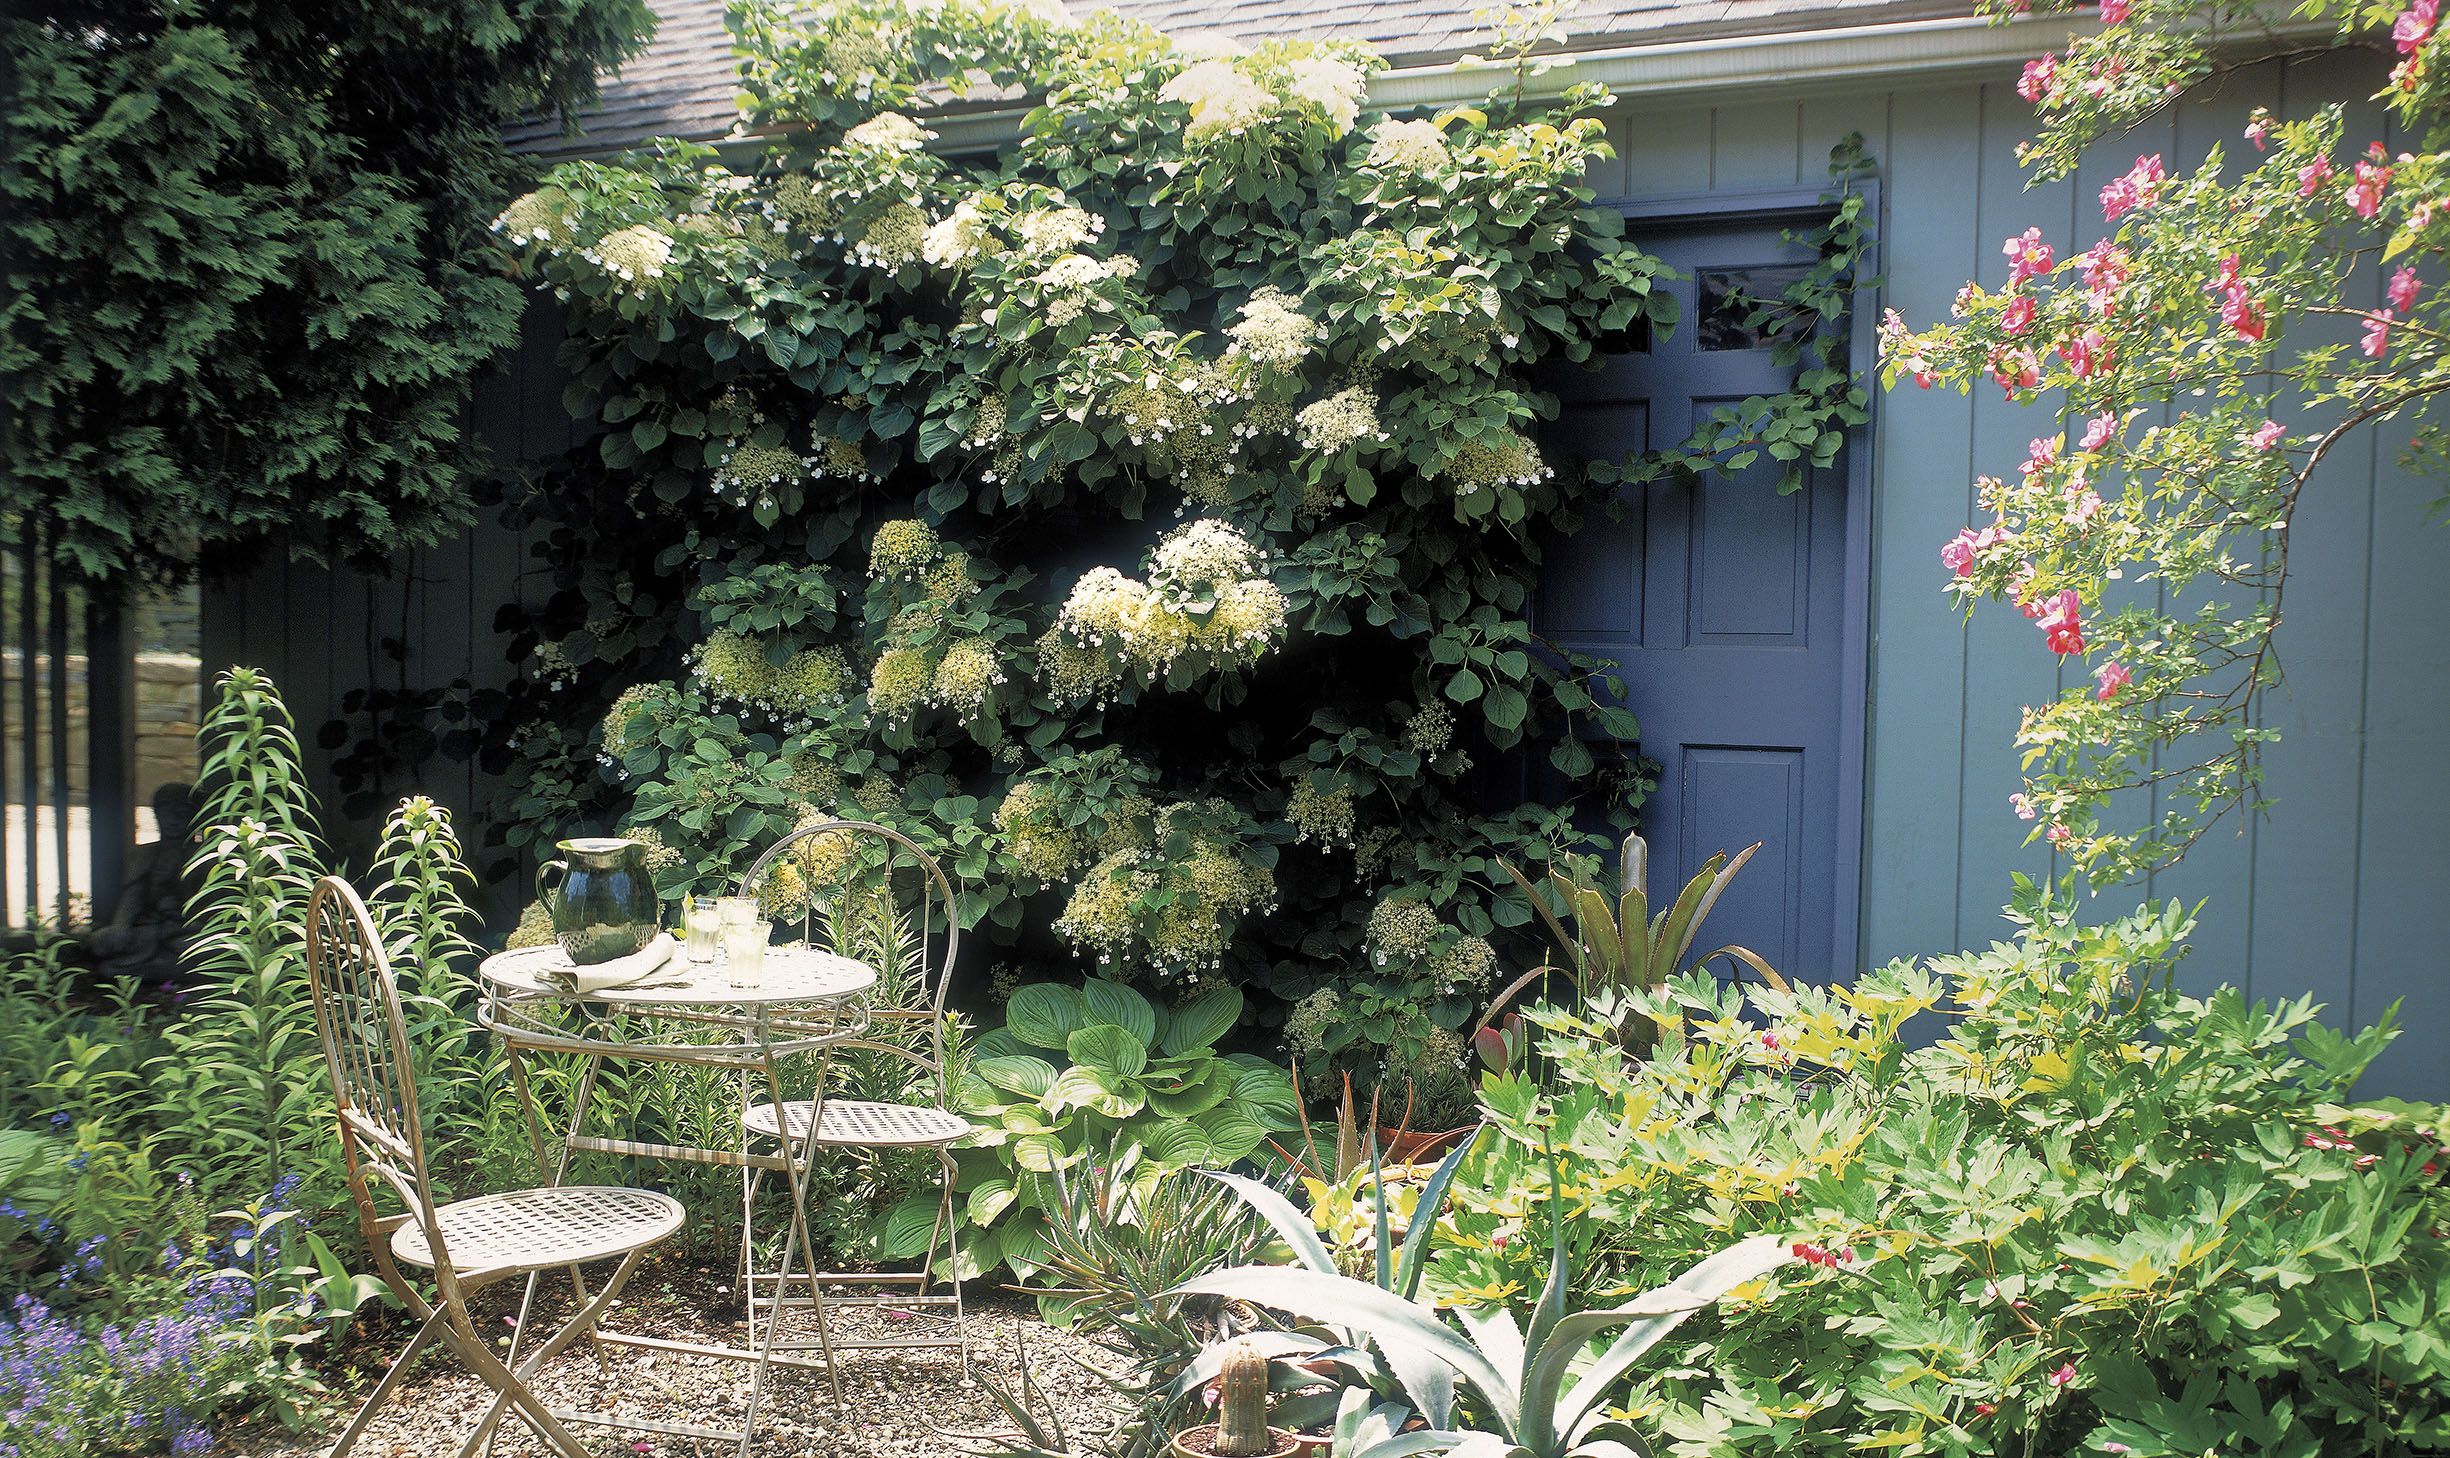 15 Best English Garden Design Ideas How To Make An English Garden Landscape,2 Bedroom Apartments For Rent In Atlanta Ga Under 600